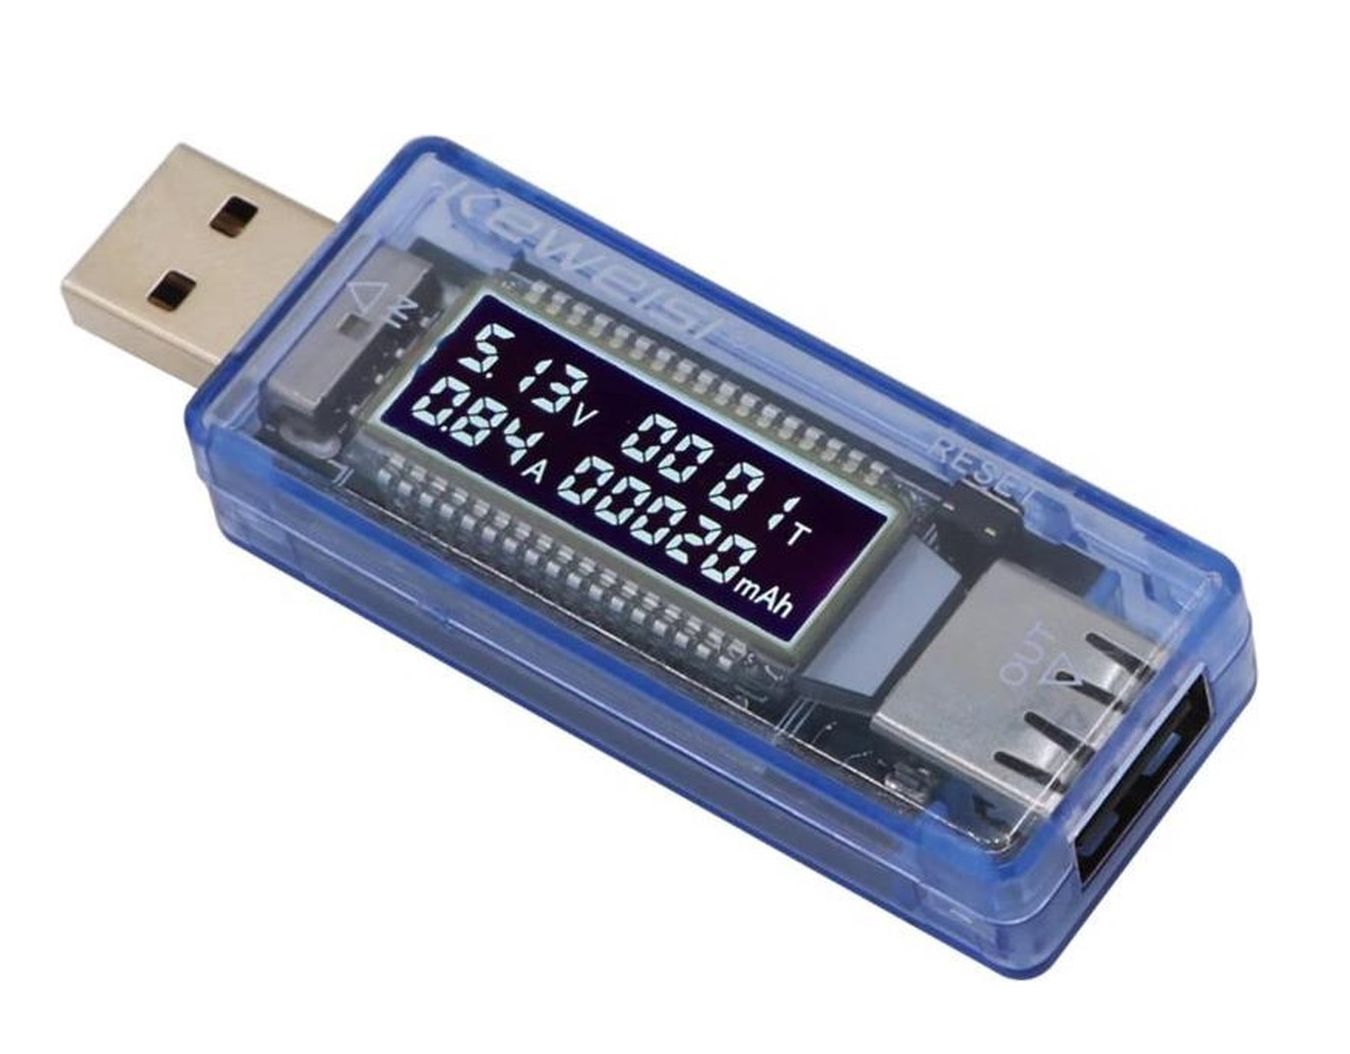 USB-A stroom tester KWS-V20 03